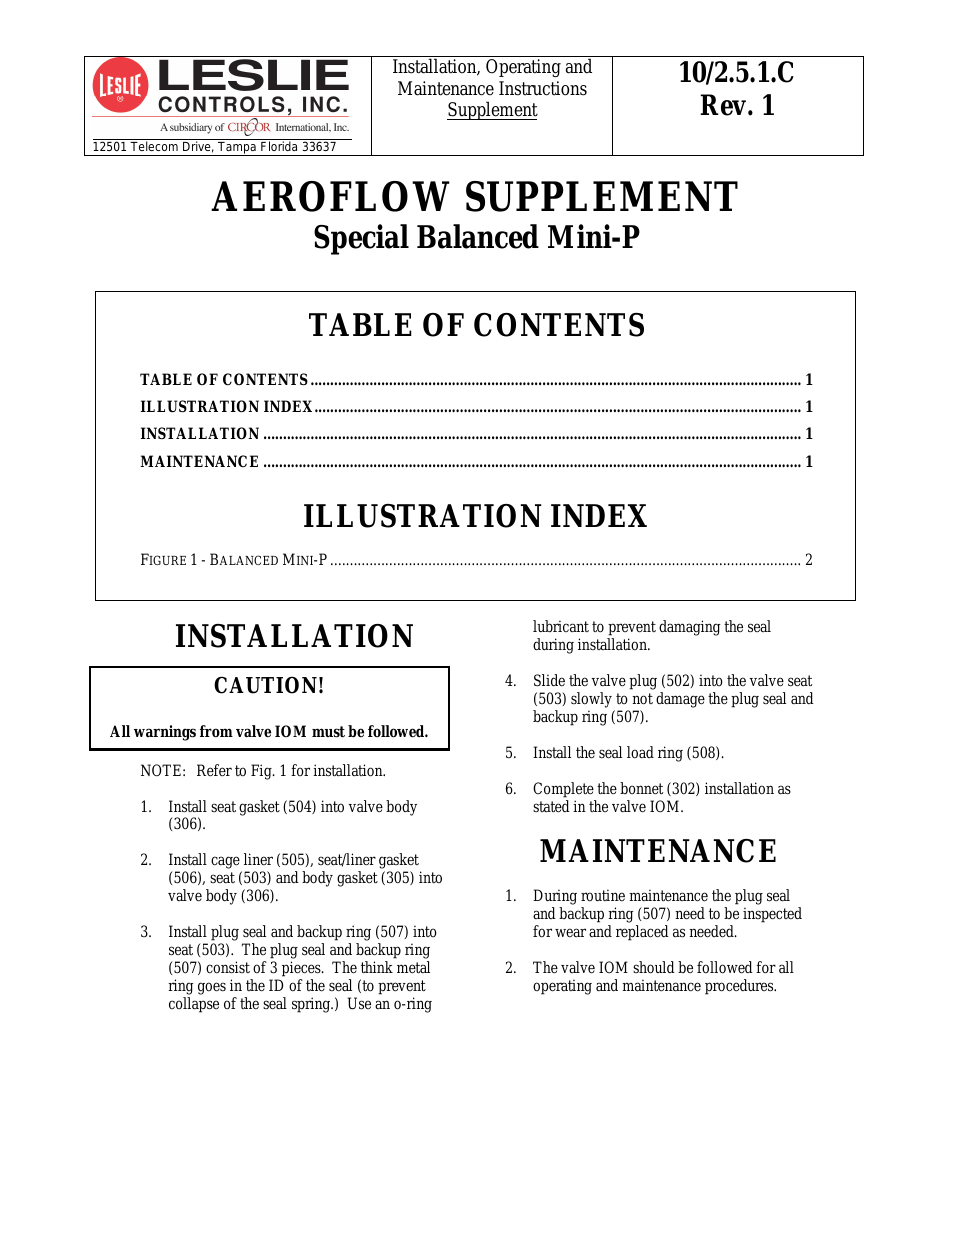 AEROFLOW SUPPLEMENT Special Balanced Mini-P